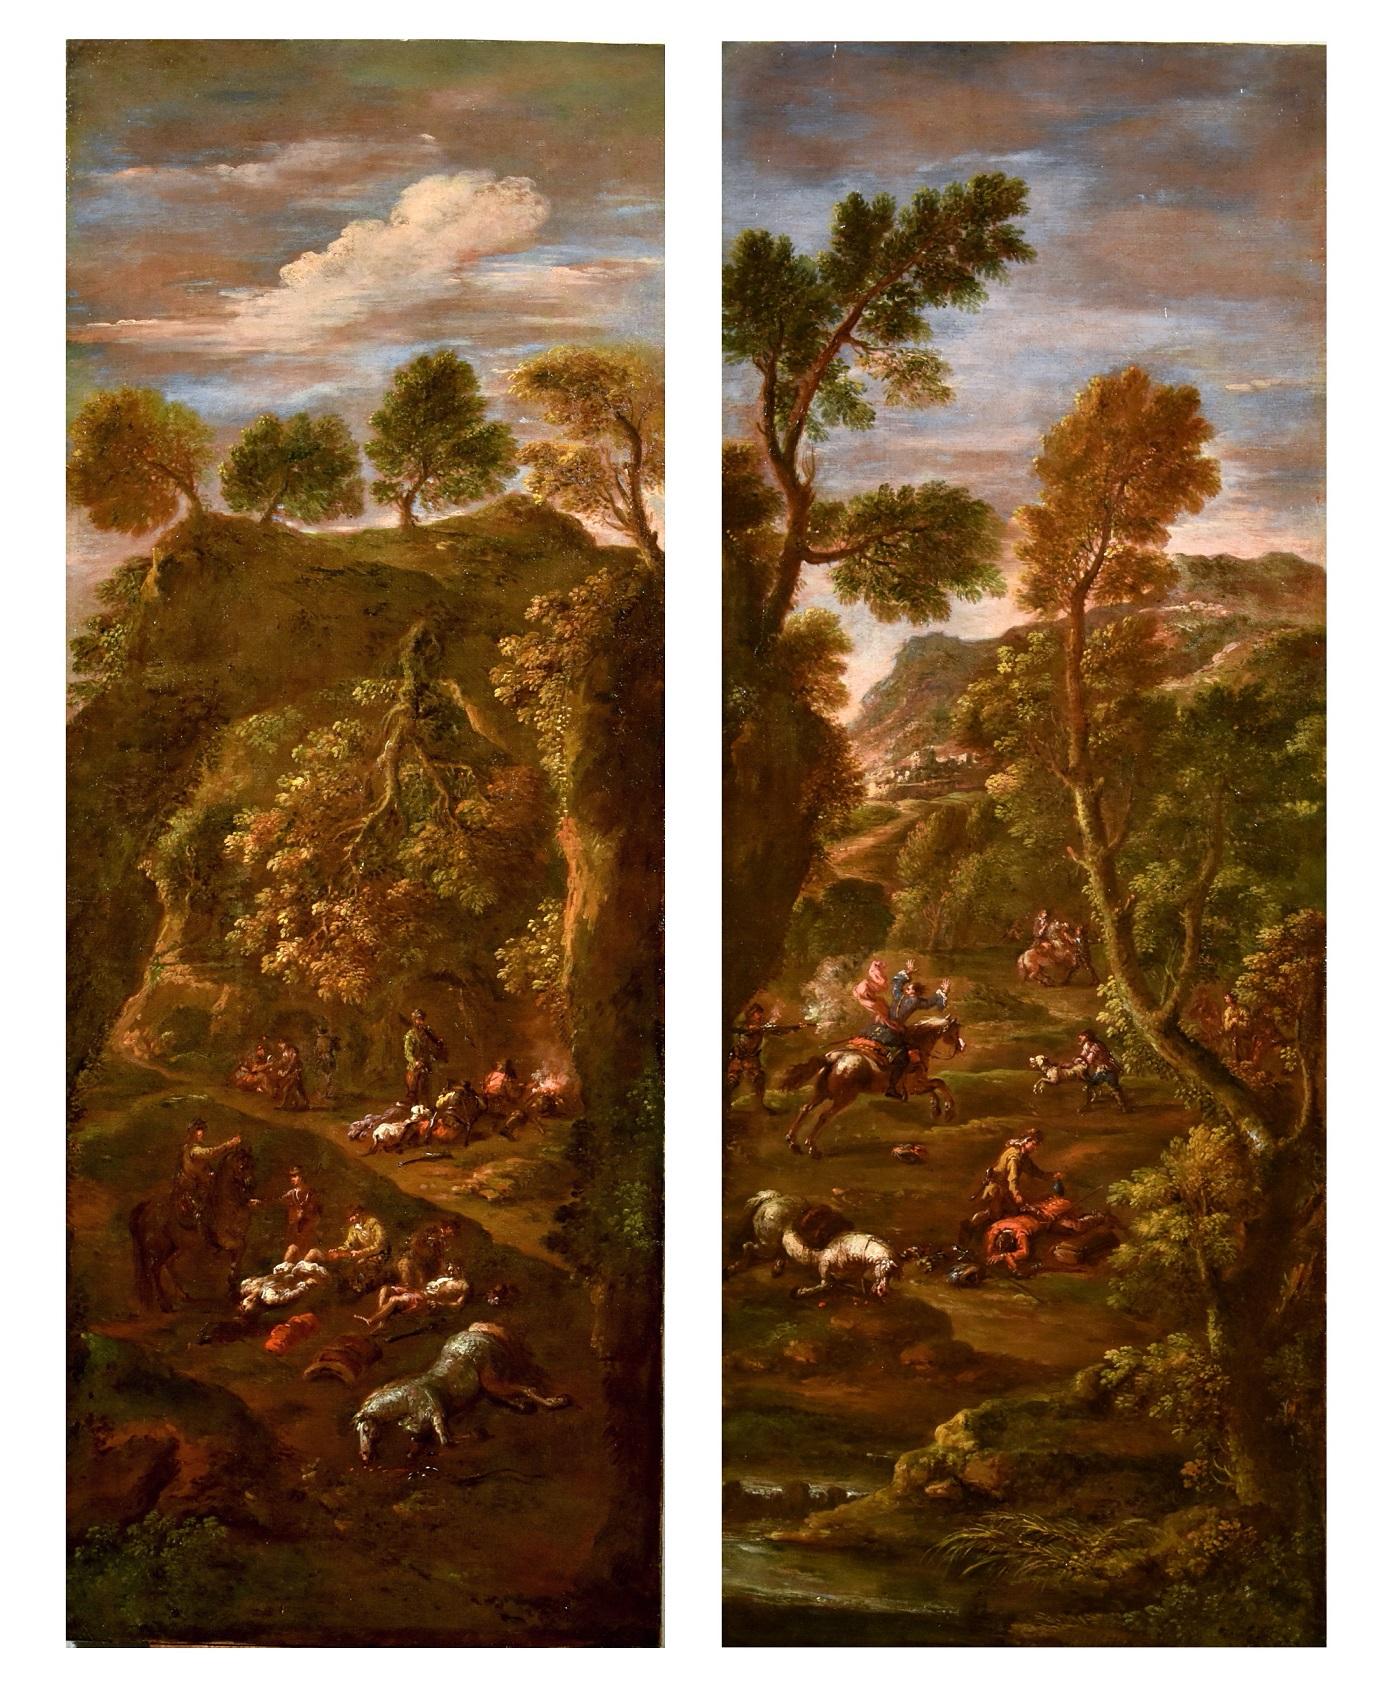 Zais Landscape Couple Paint Oil on canvas Old master 18th Century Italy Venice